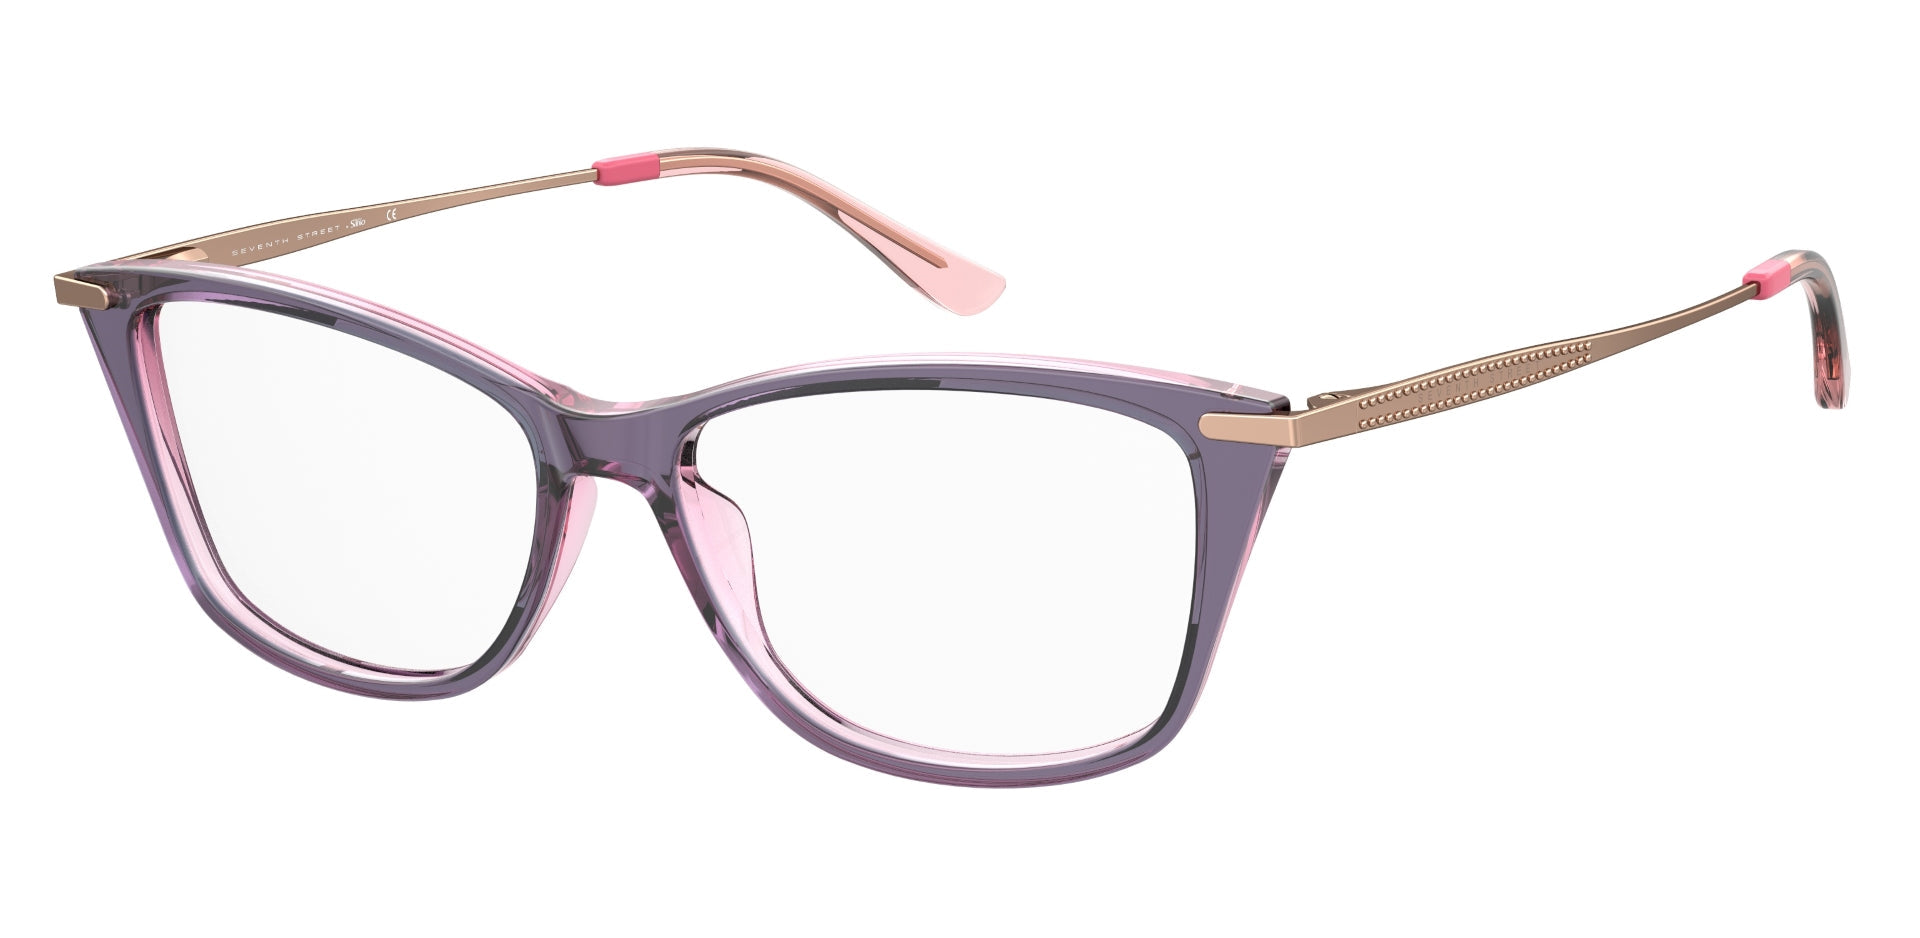 SEVENTH STREET by SAFILO WOMAN RECTANGULAR Eyeglasses-7A 573 Size 52